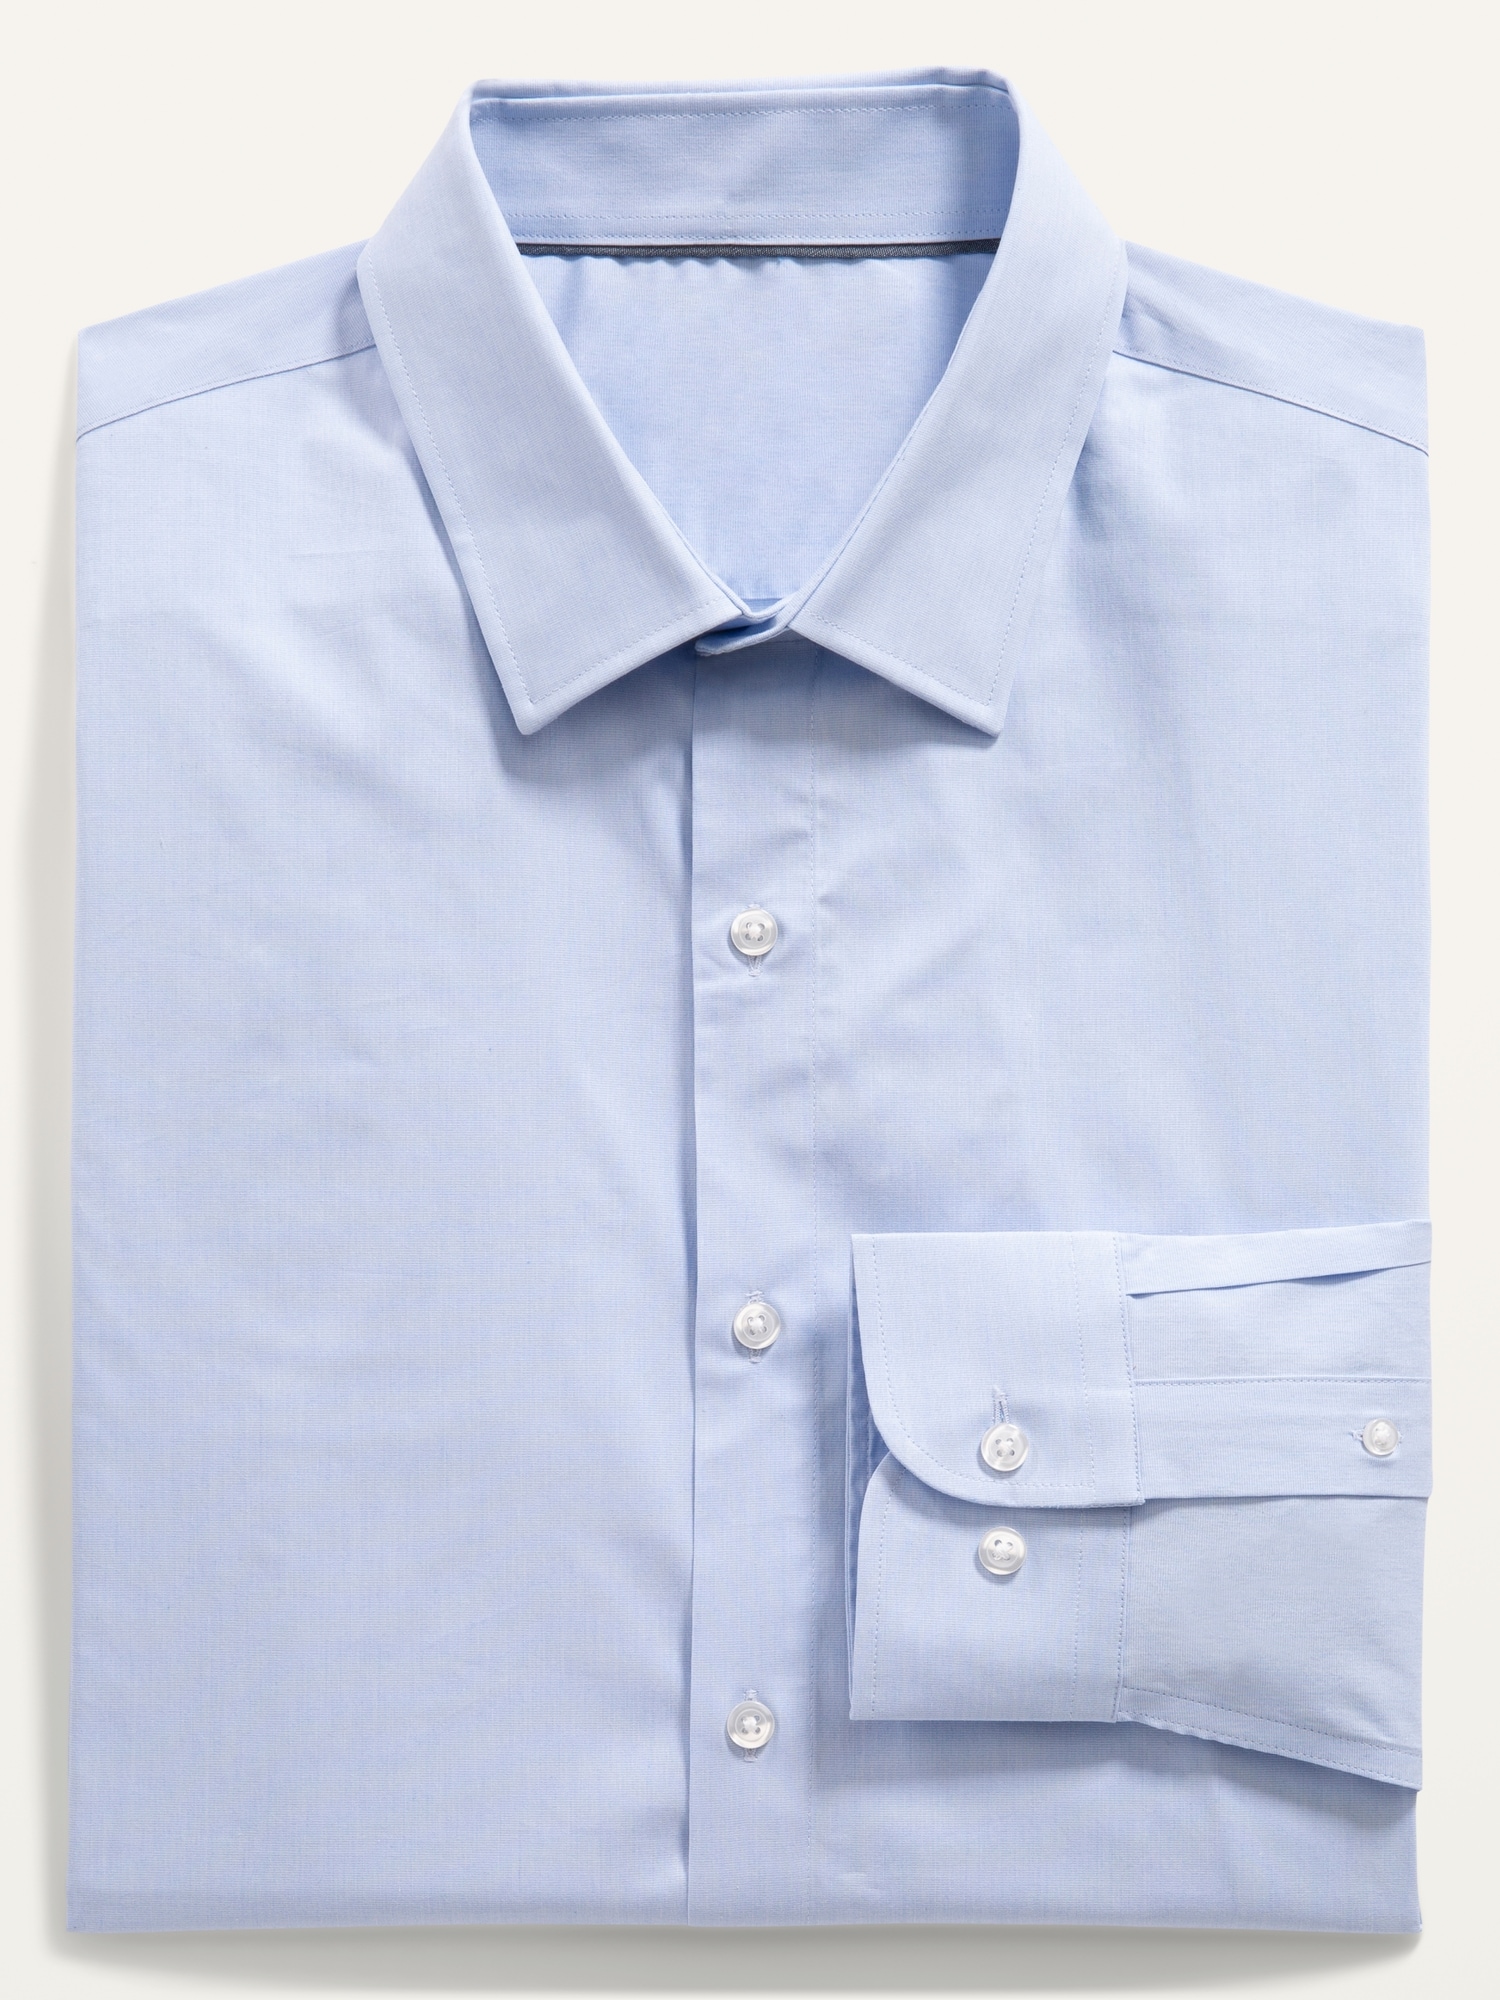 Old Navy Slim-Fit Pro Signature Performance Dress Shirt for Men blue. 1